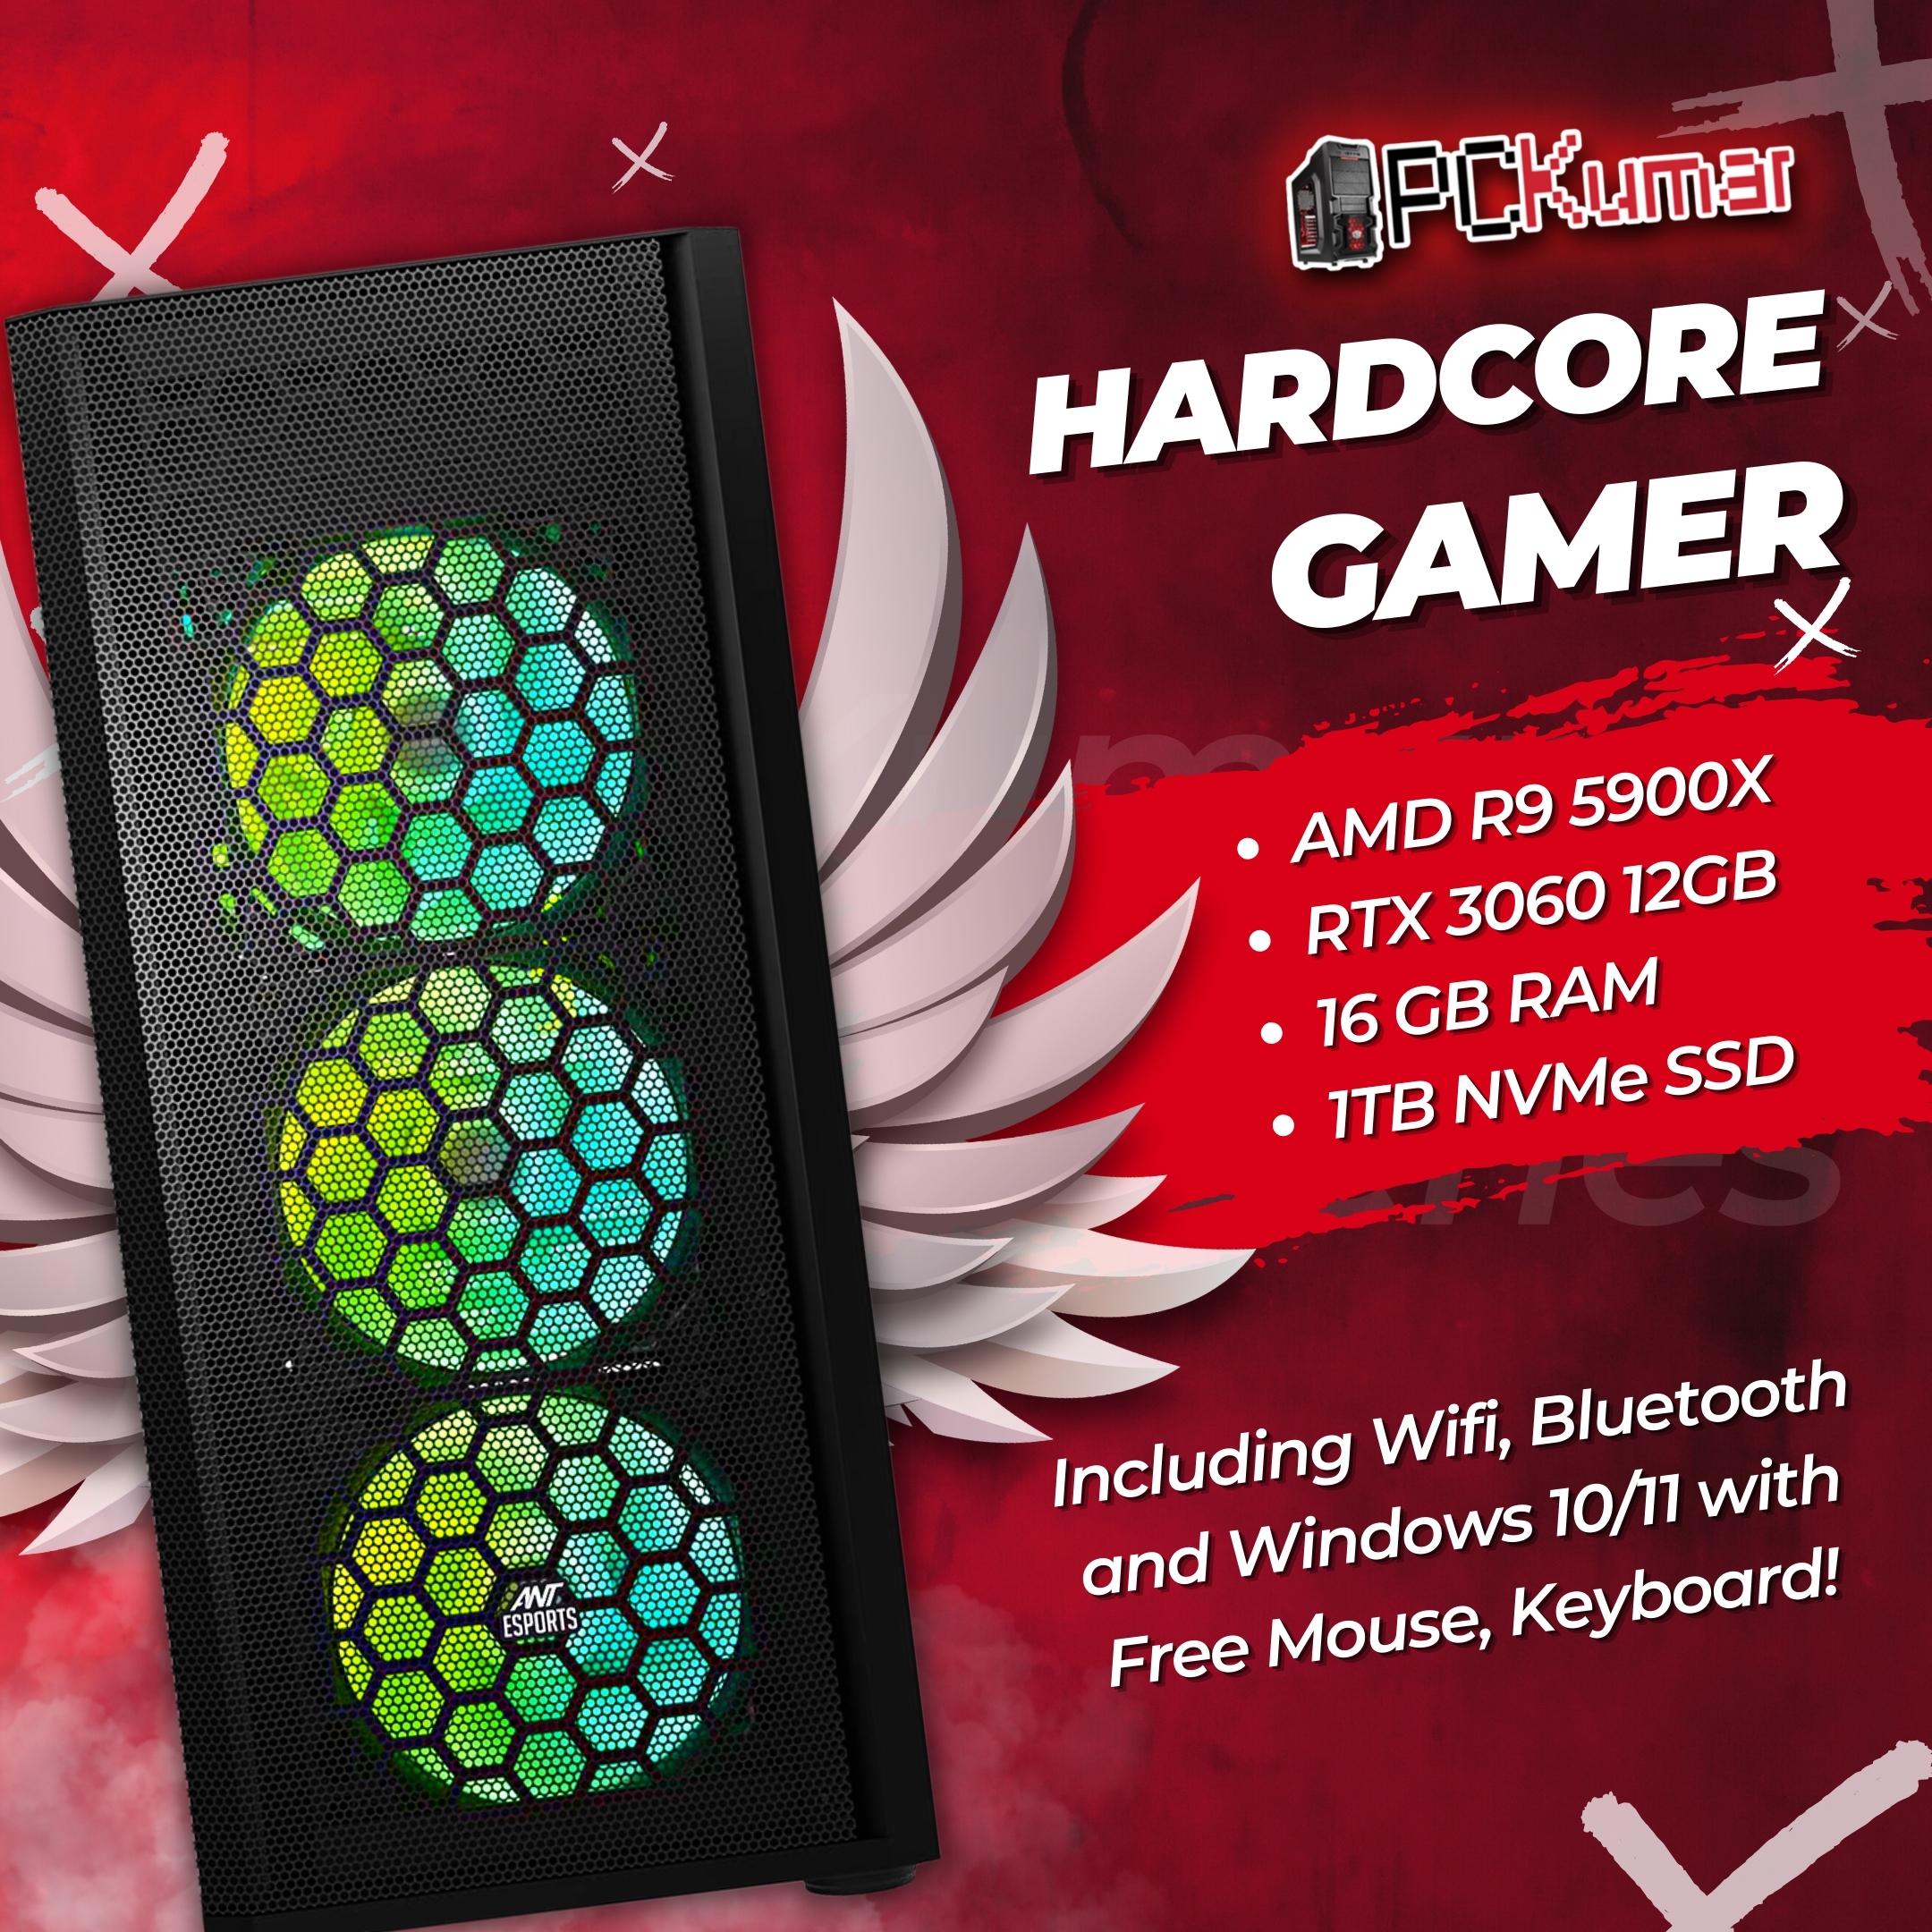 Hardcore Gamer with AMD Ryzen 9 5900X + RTX 3060